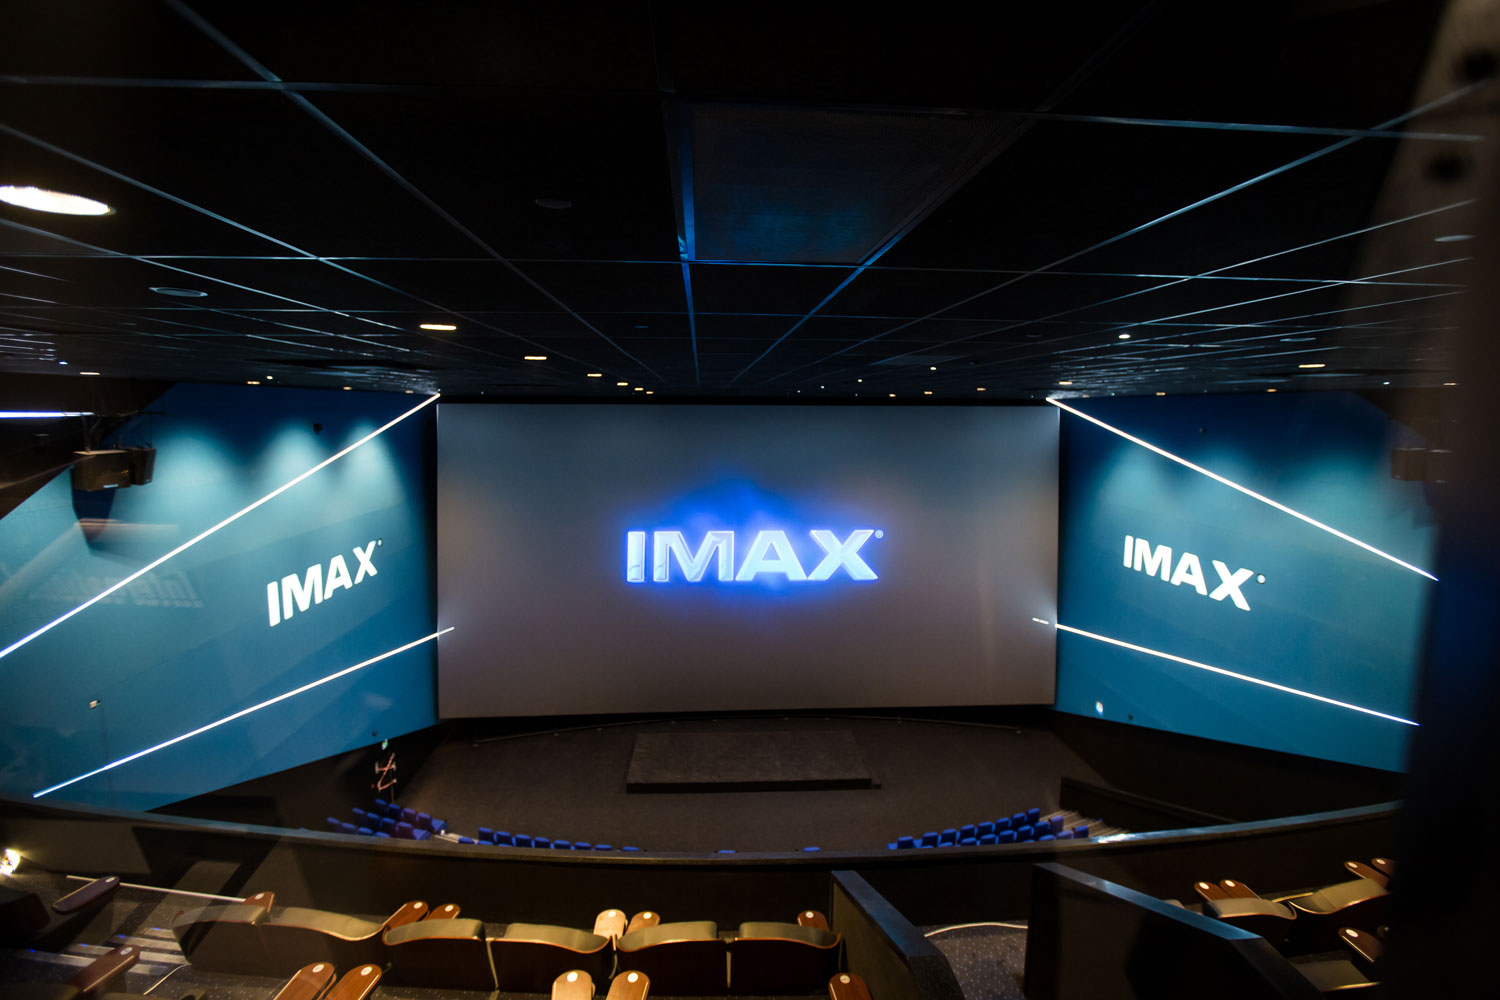 Abu Dhabi's IMAX cinema is opening The Galleria Al Maryah Island Time Abu Dhabi